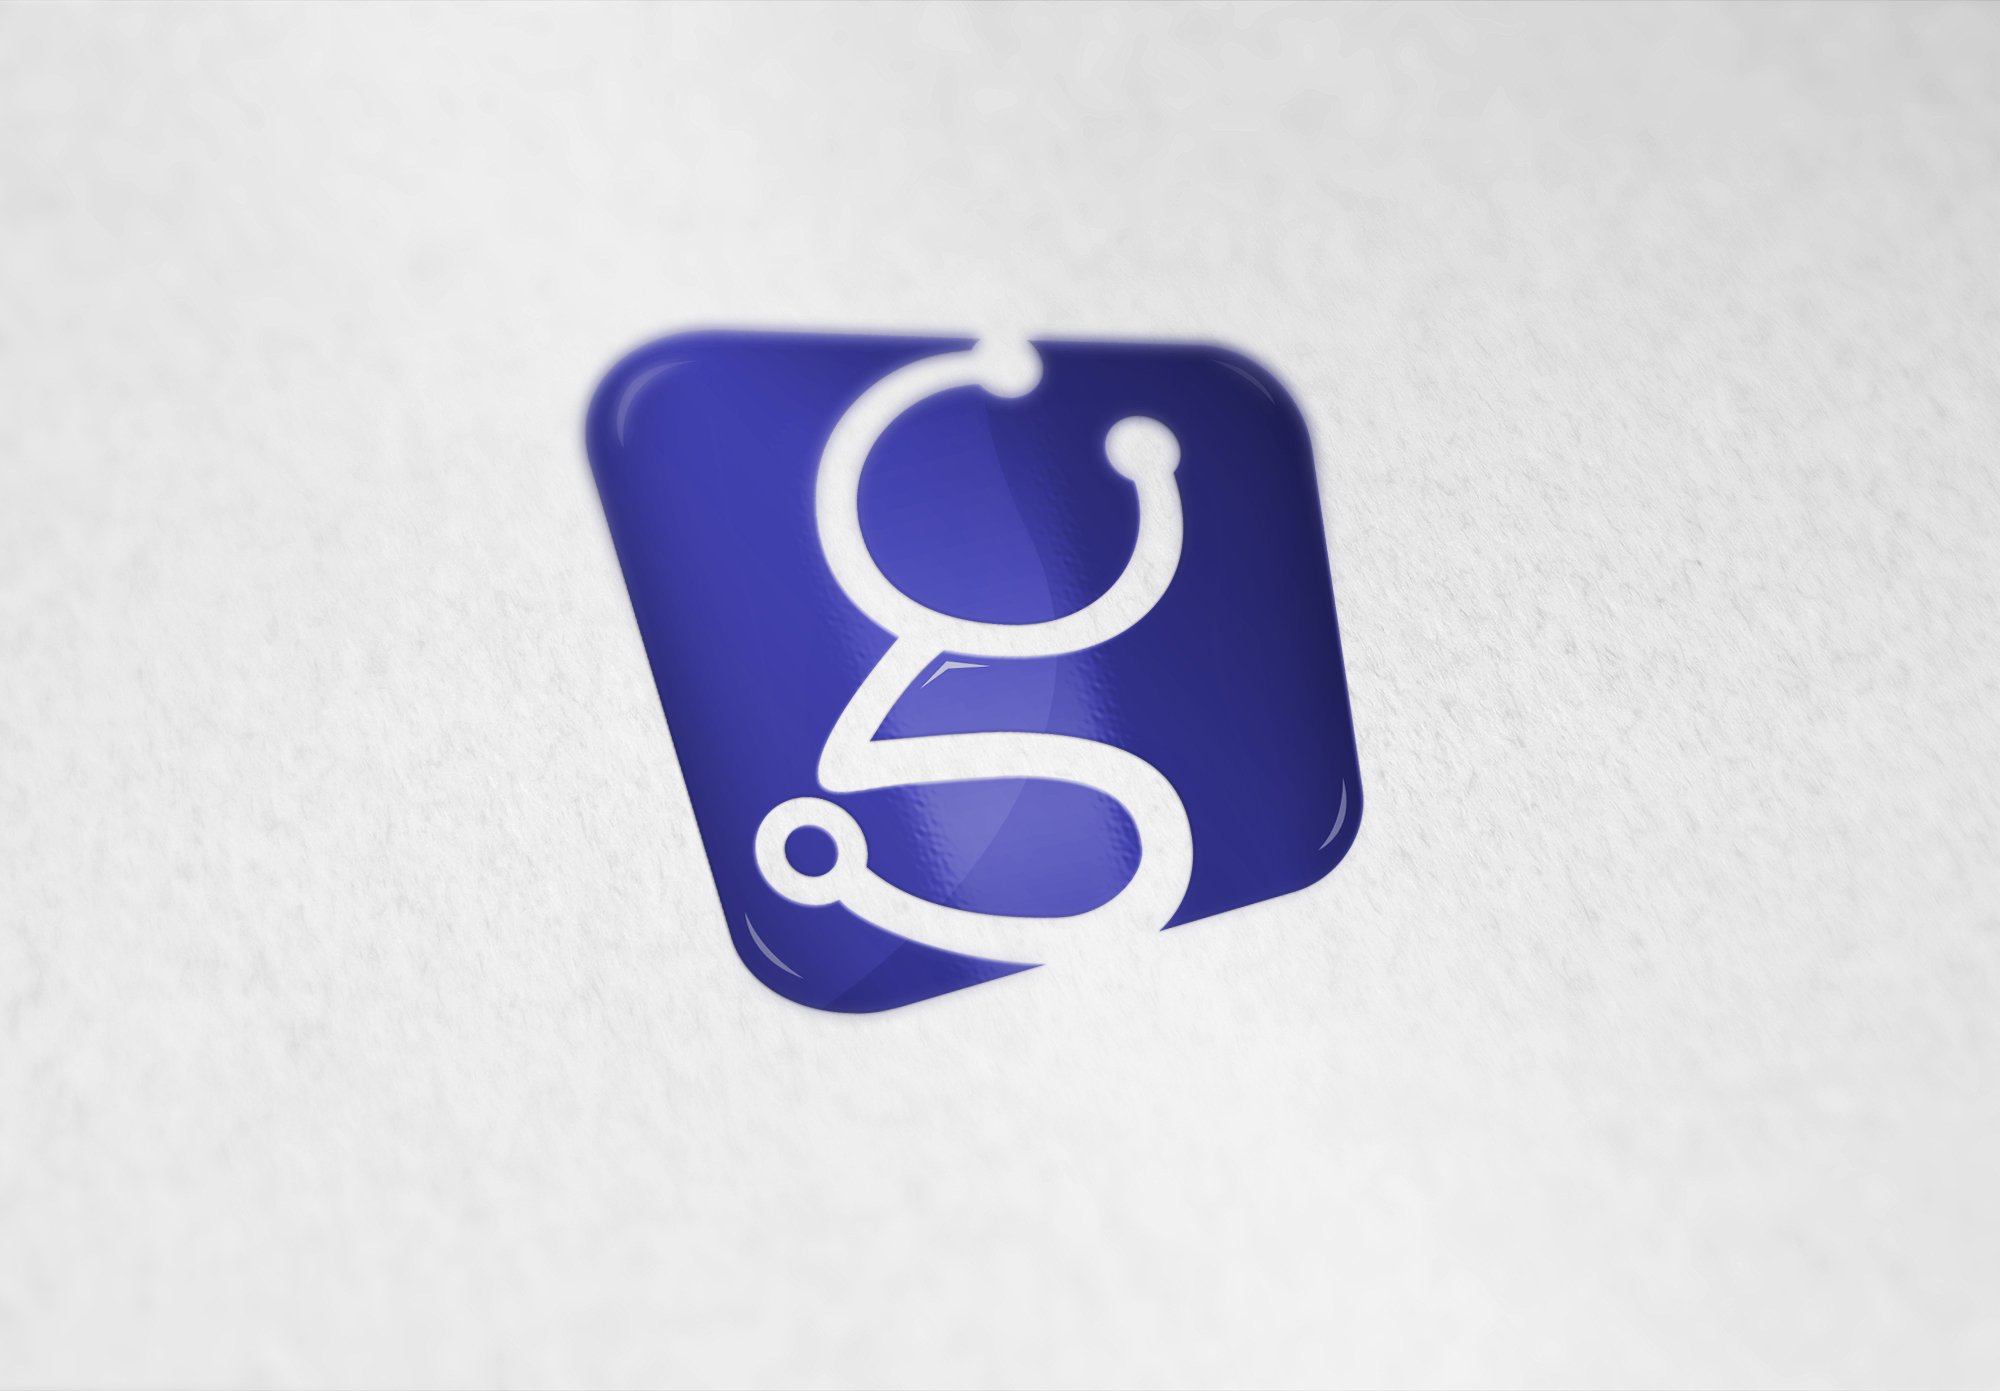 G Letter stethoscope logo icon cover image.